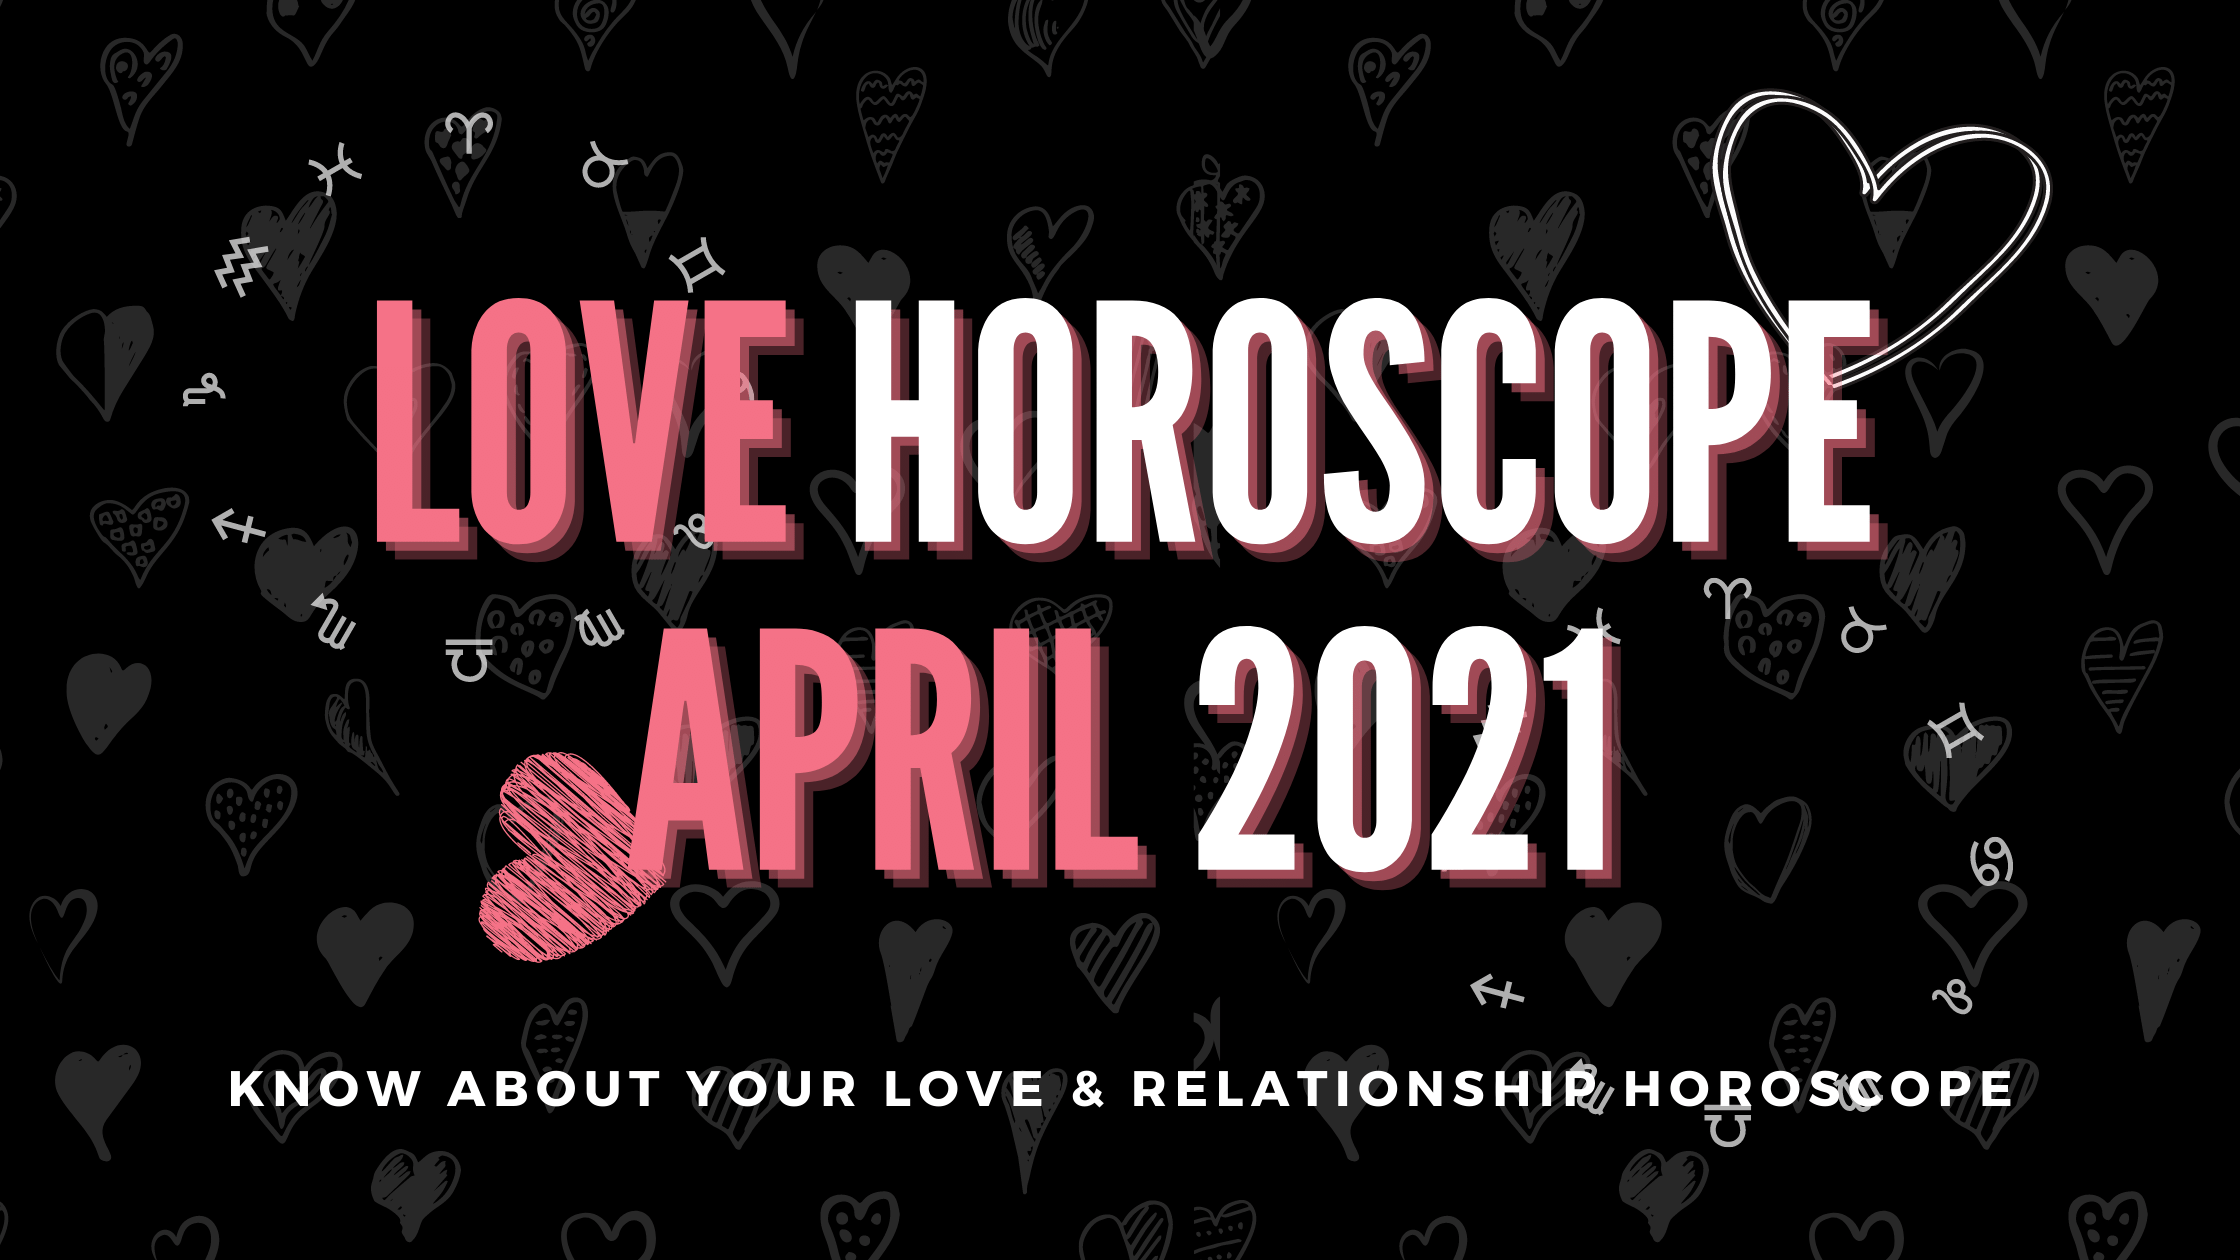 Love horoscope April 2021